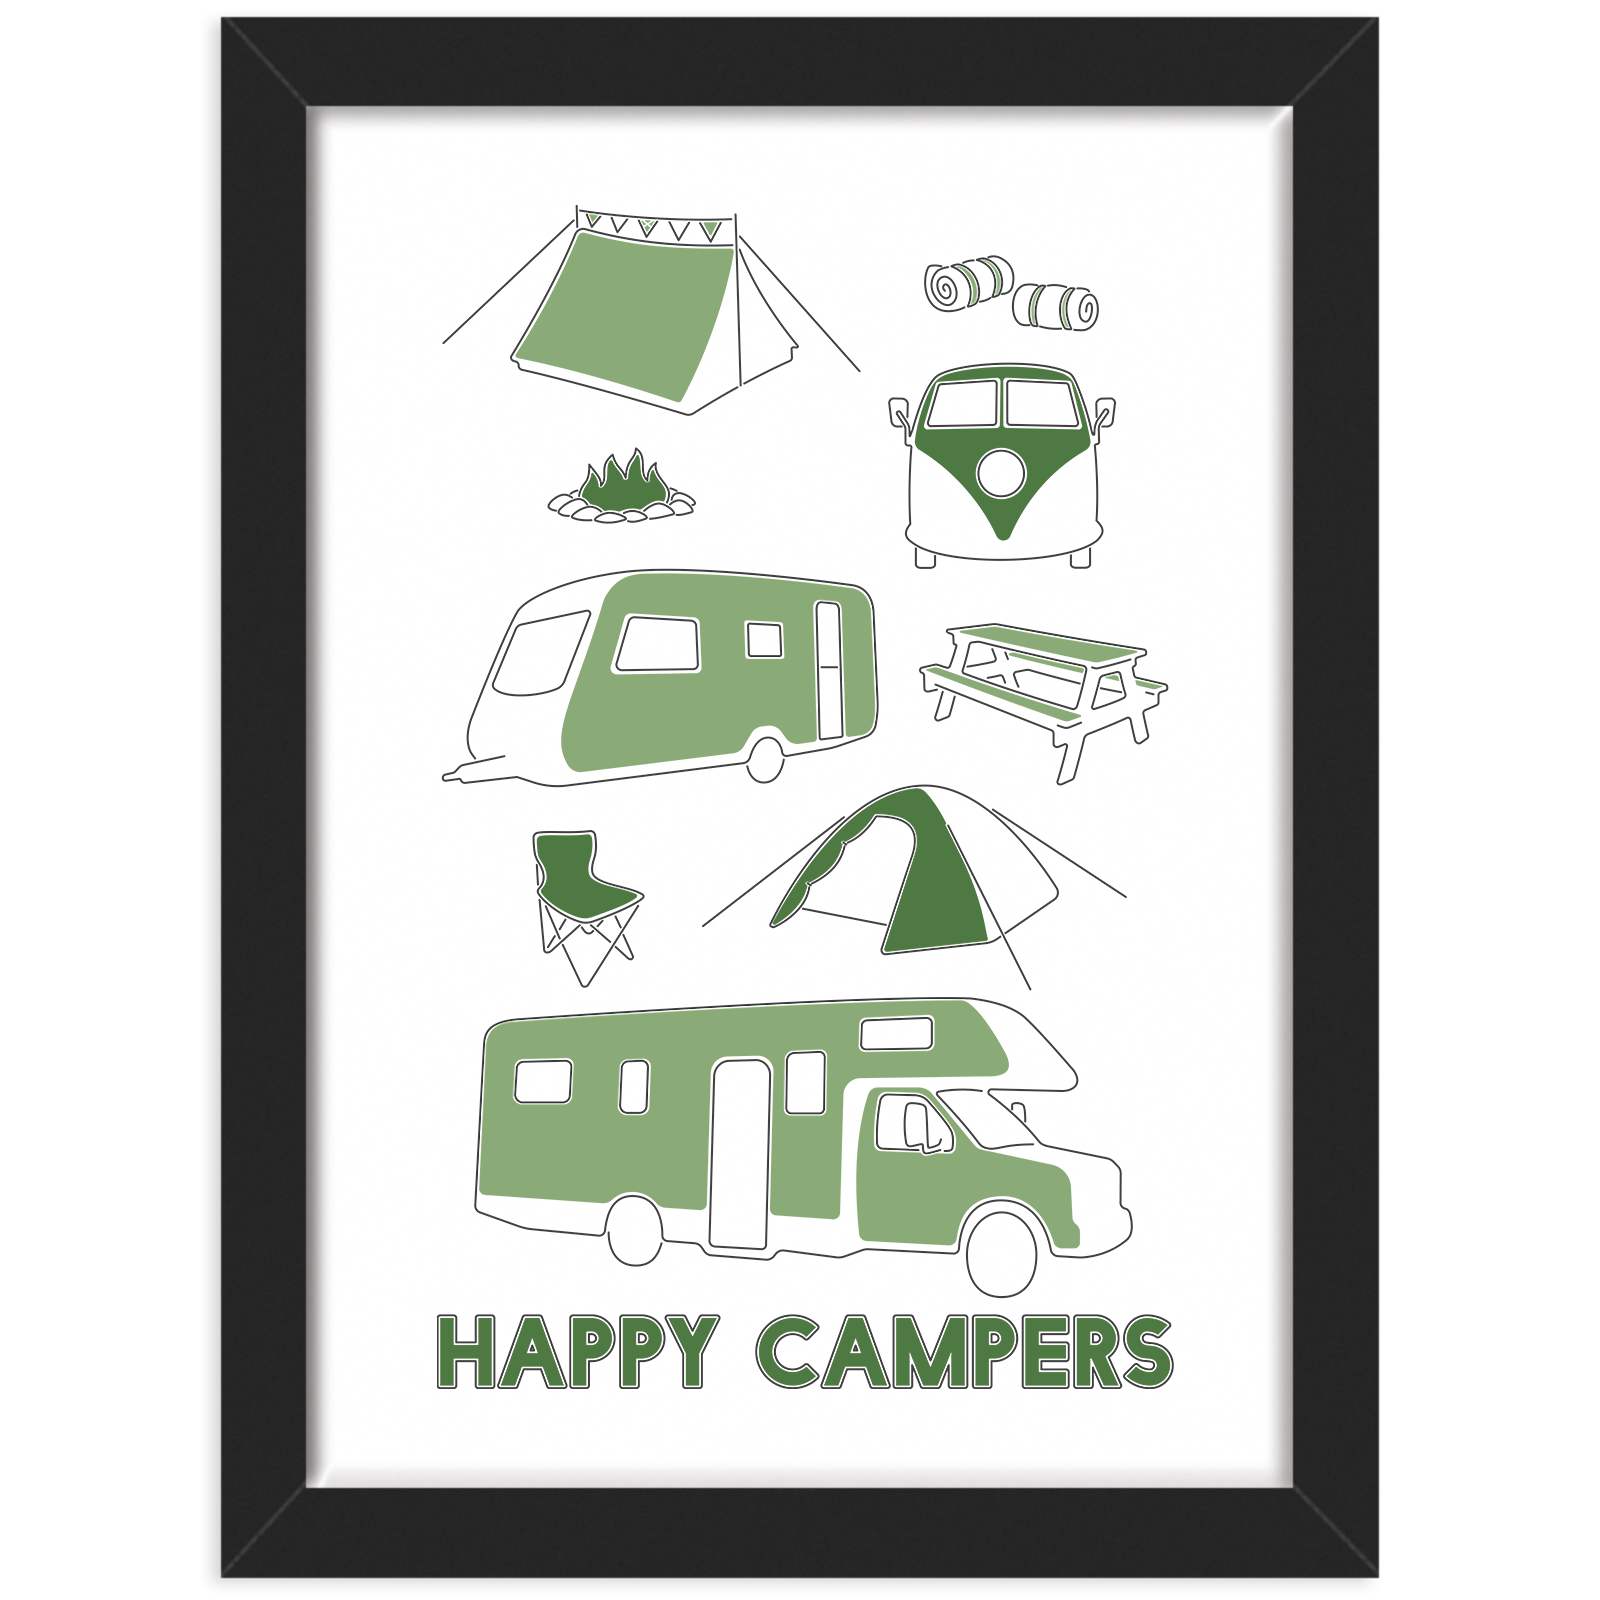 Camping print black frame